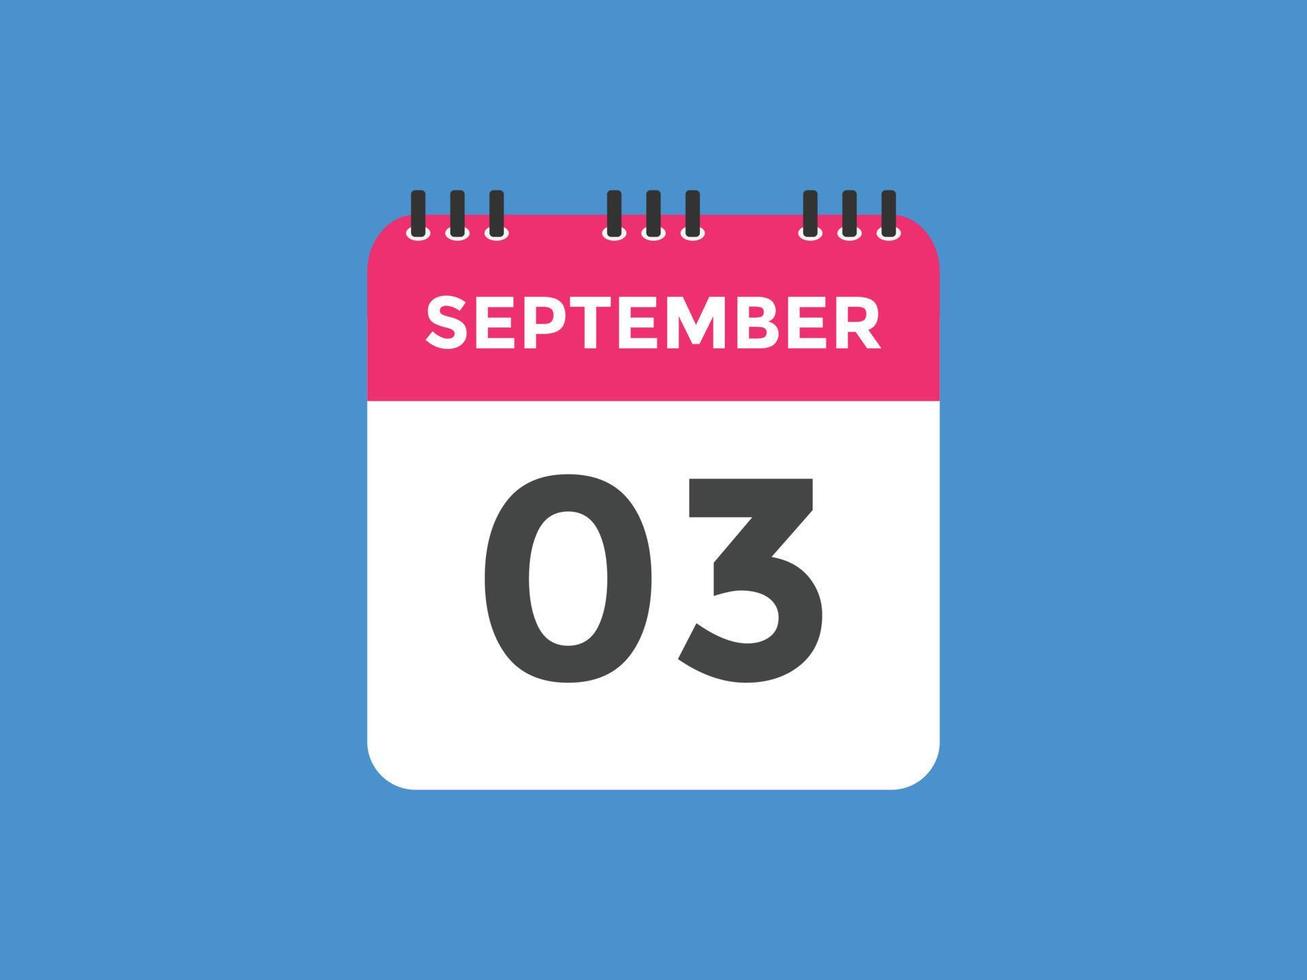 september 3 calendar reminder. 3rd september daily calendar icon template. Calendar 3rd september icon Design template. Vector illustration